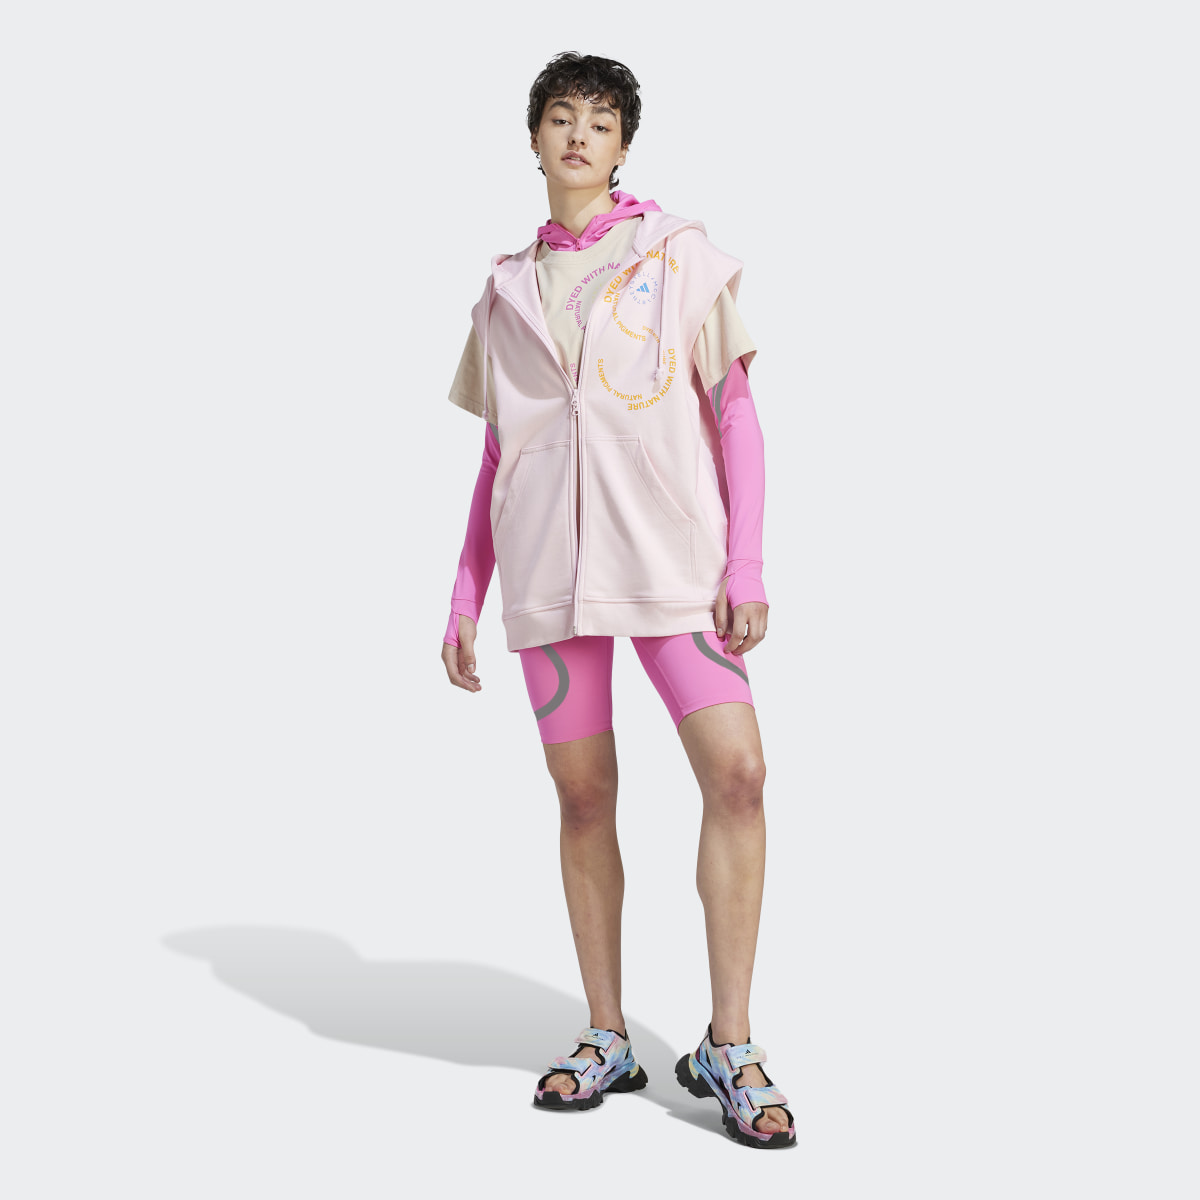 adidas by Stella McCartney Sportswear Sweatshirt (Gender Neutral)